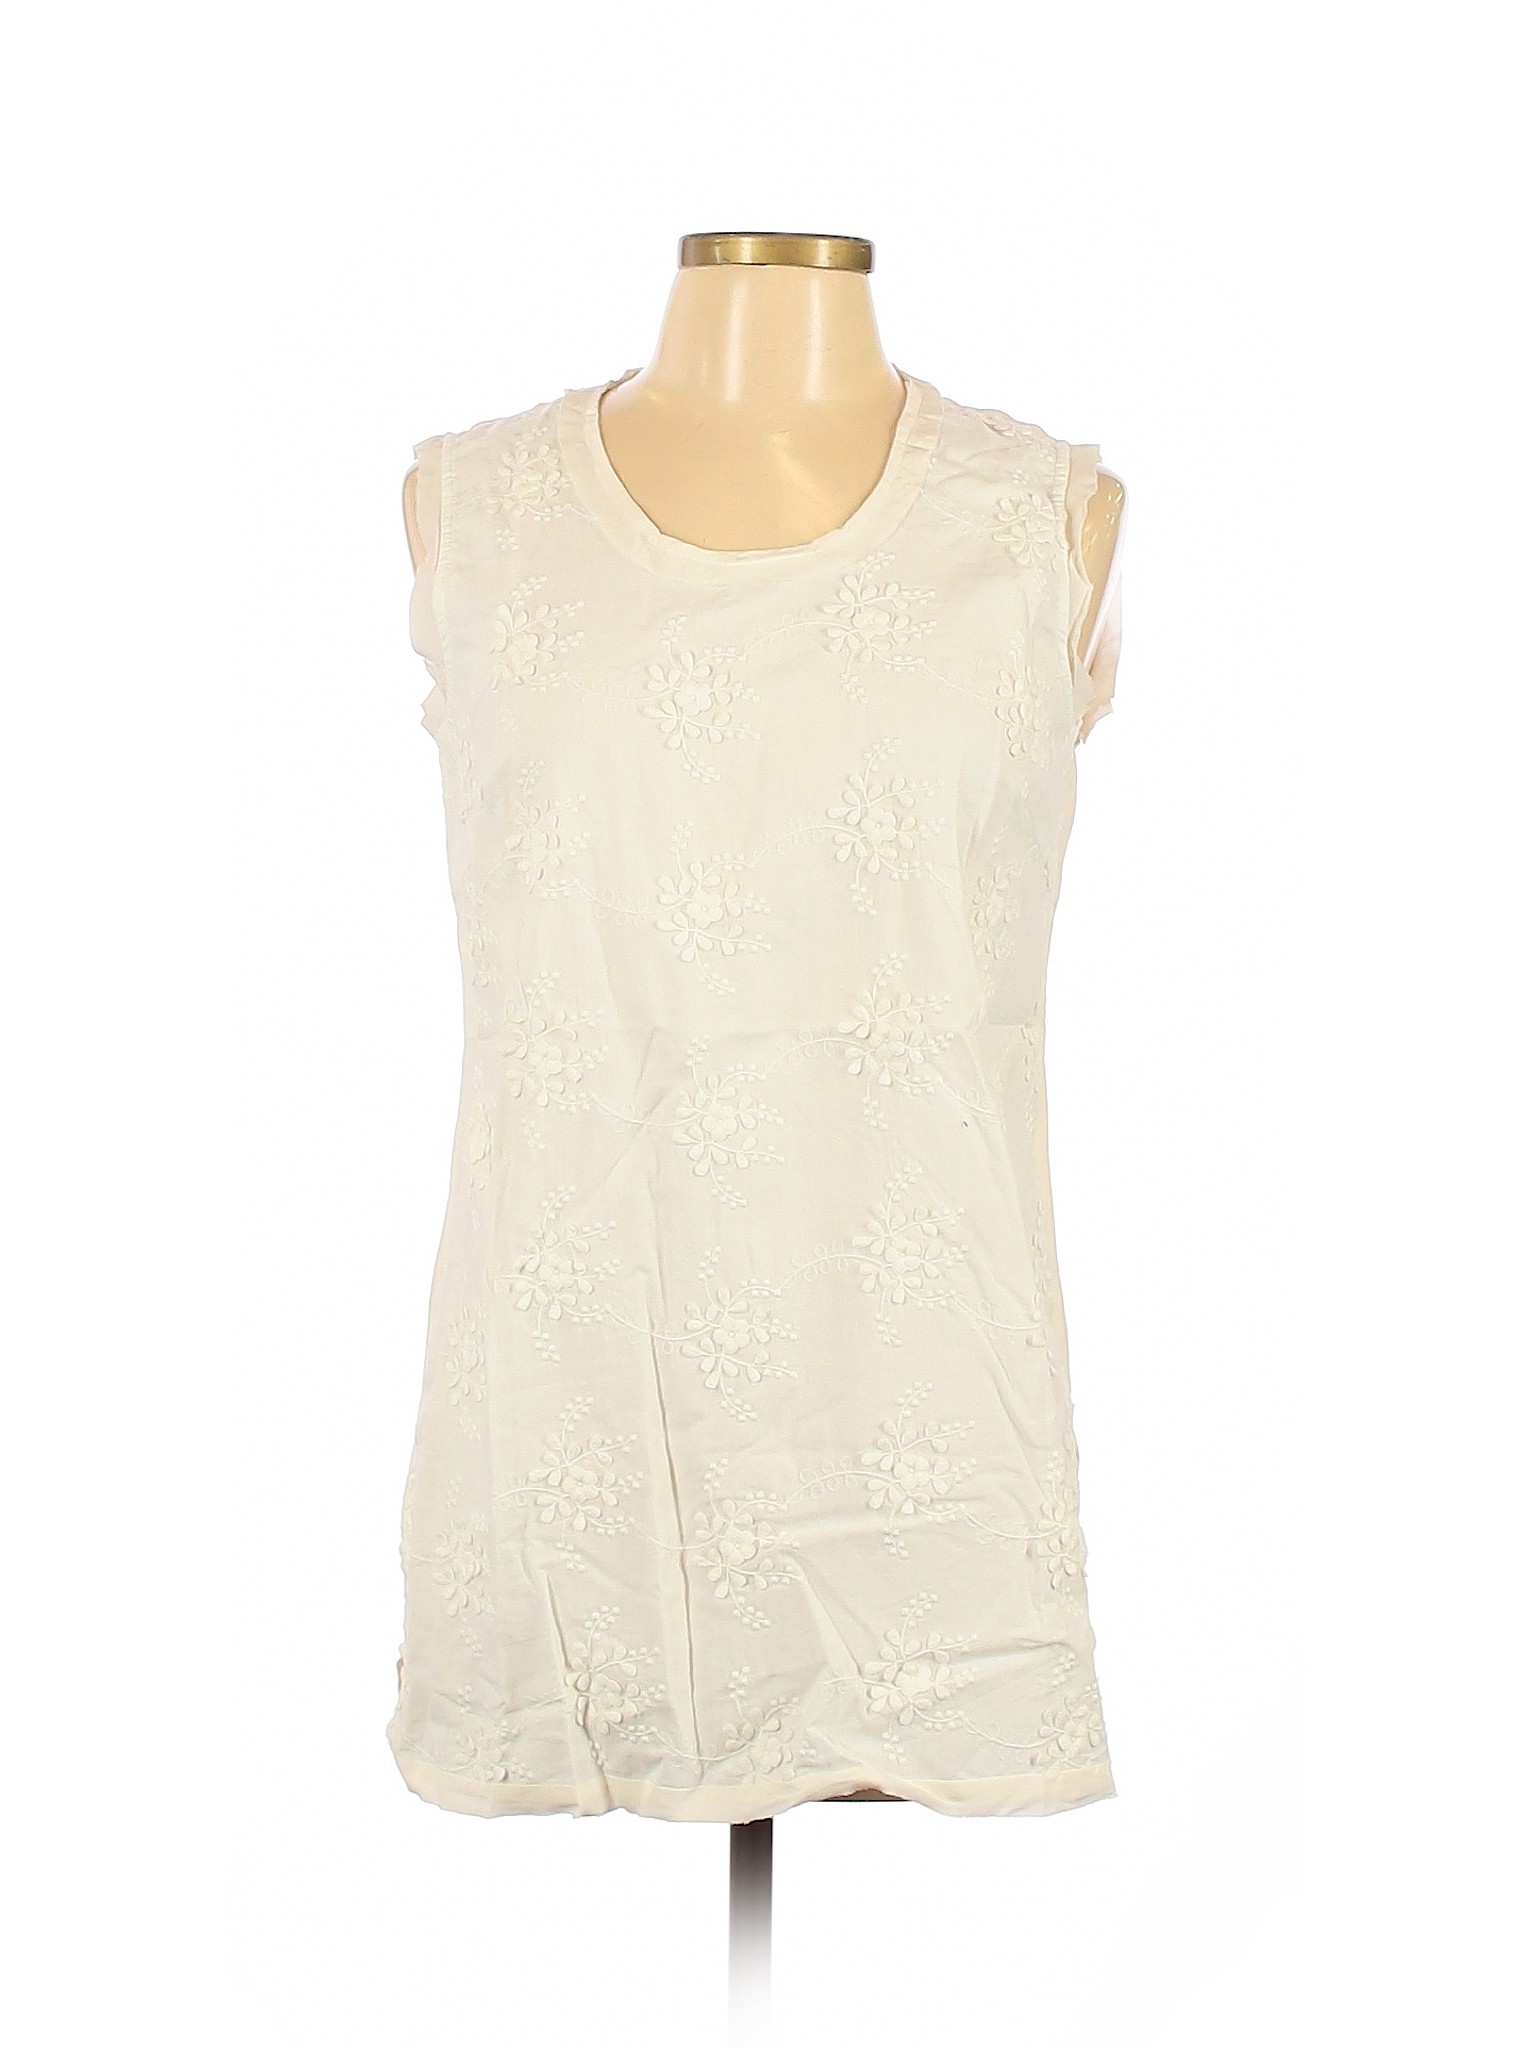 Unbranded Women Ivory Sleeveless Silk Top L | eBay